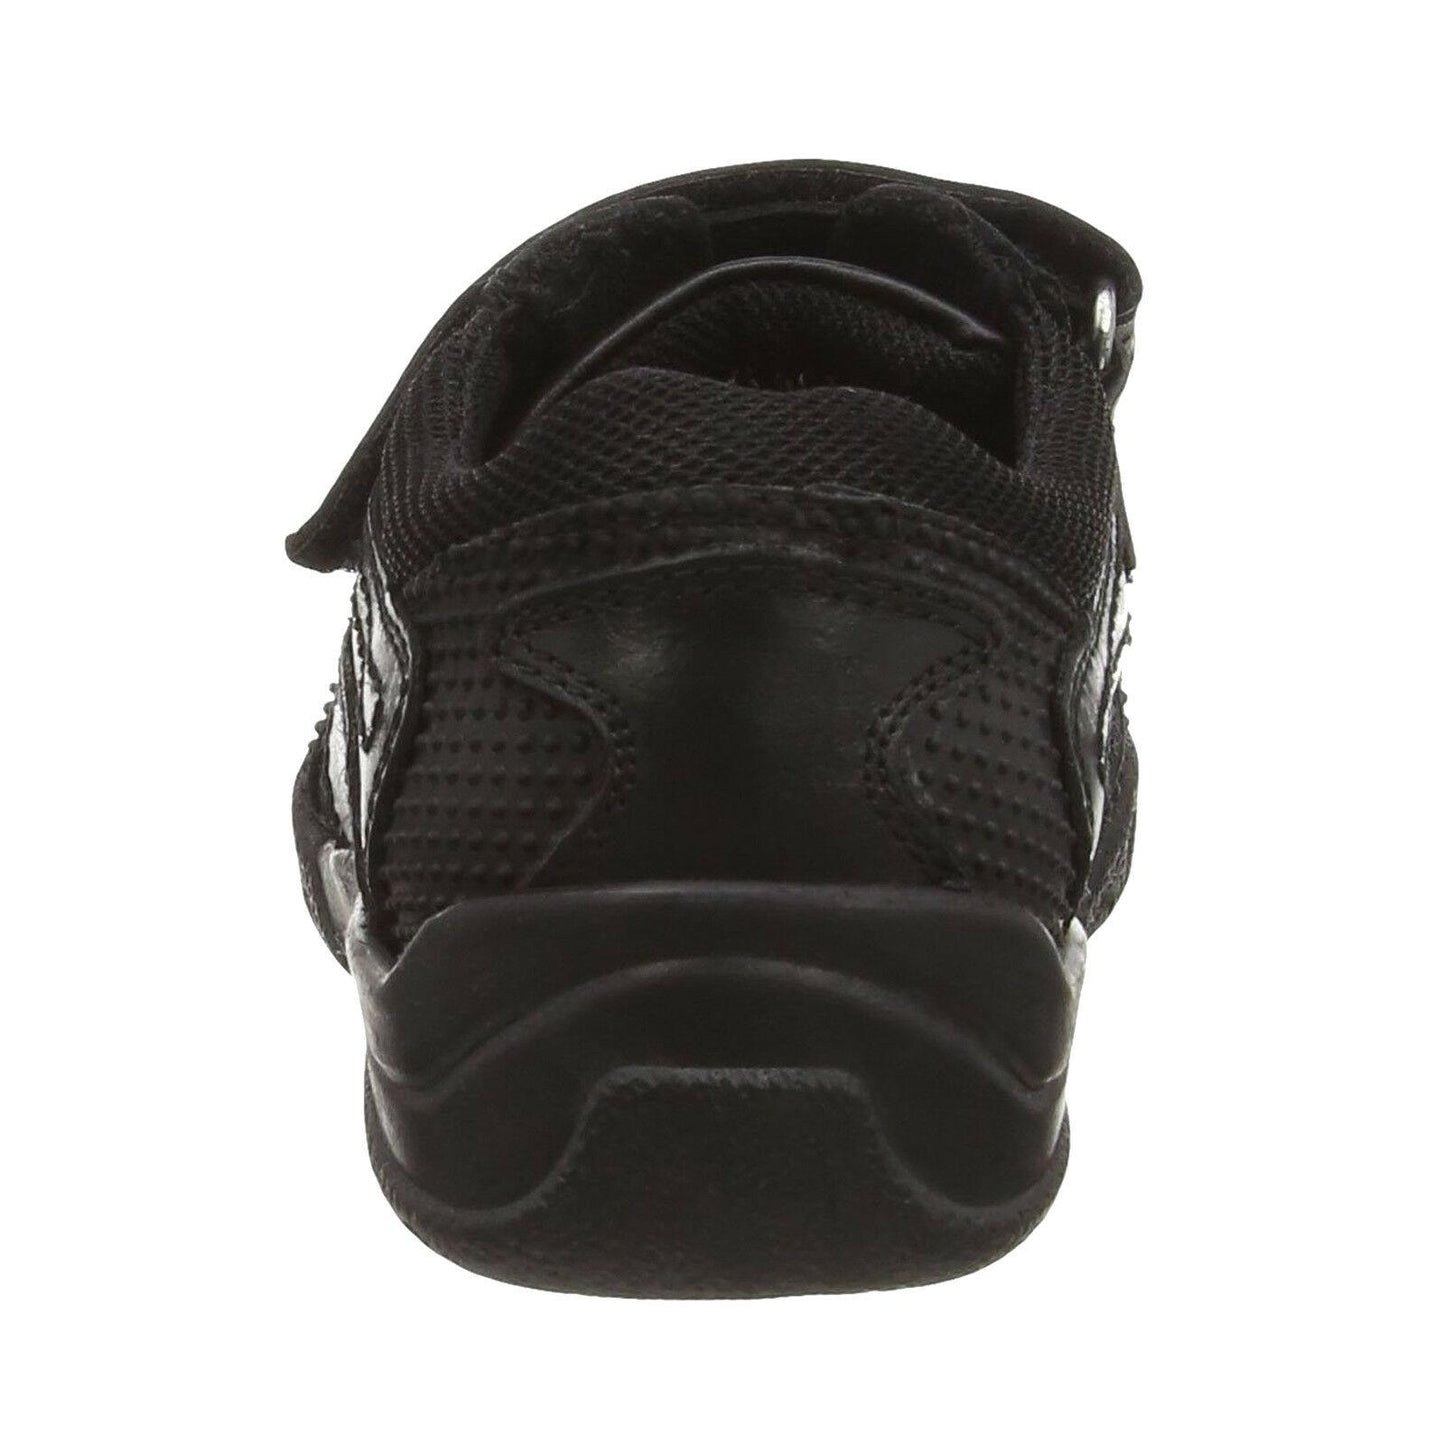 Boys Hush Puppies Jezza SNR Black Leather Double Strap School Shoes Size 3 – 9